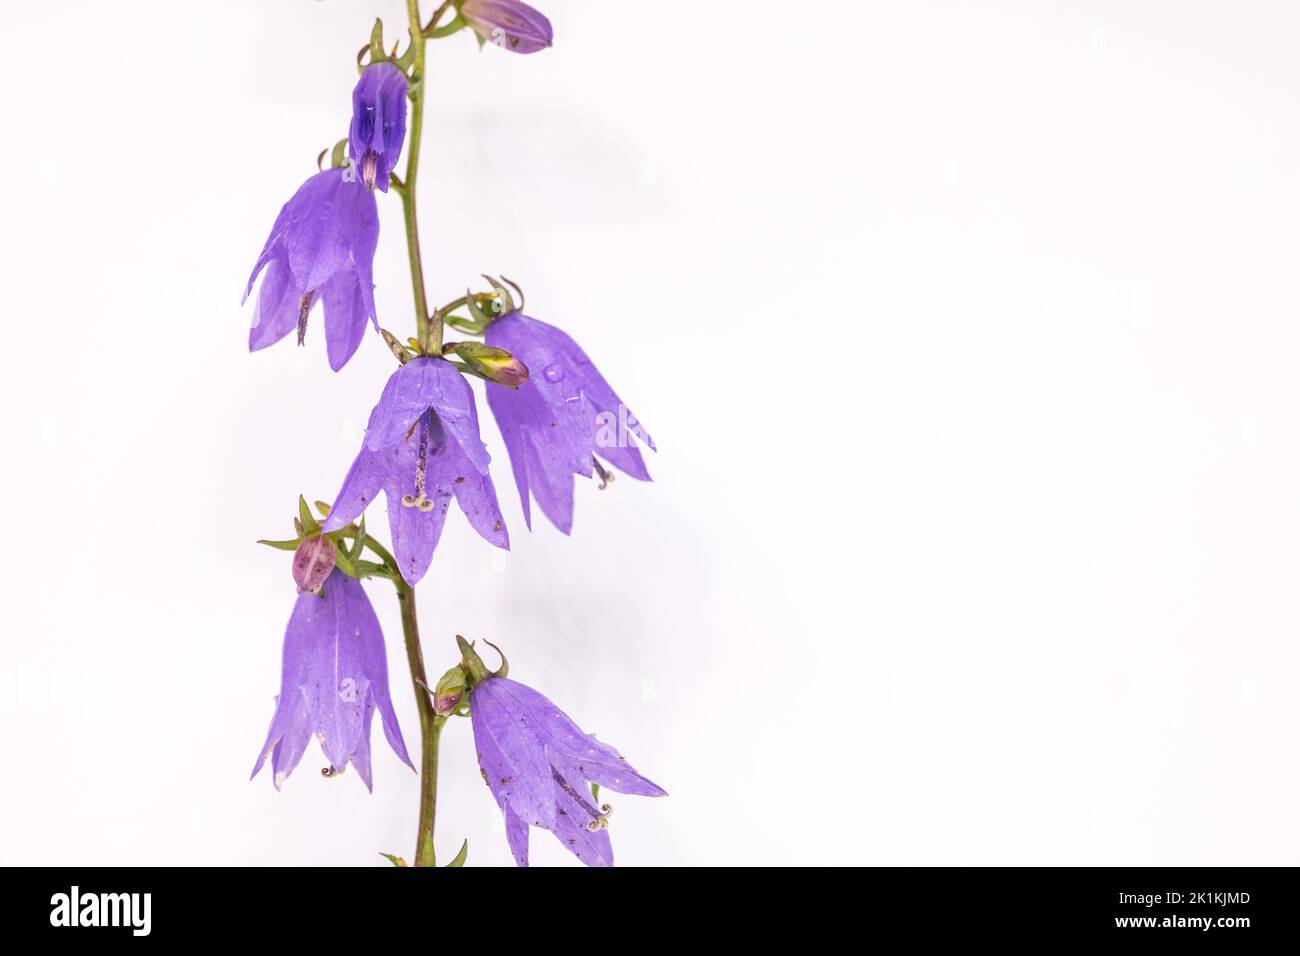 Campanula rapunculoides flower. Common names creeping bellflower, rampion, garden bluebell, purple bell, garden harebell. On the white background. Stock Photo